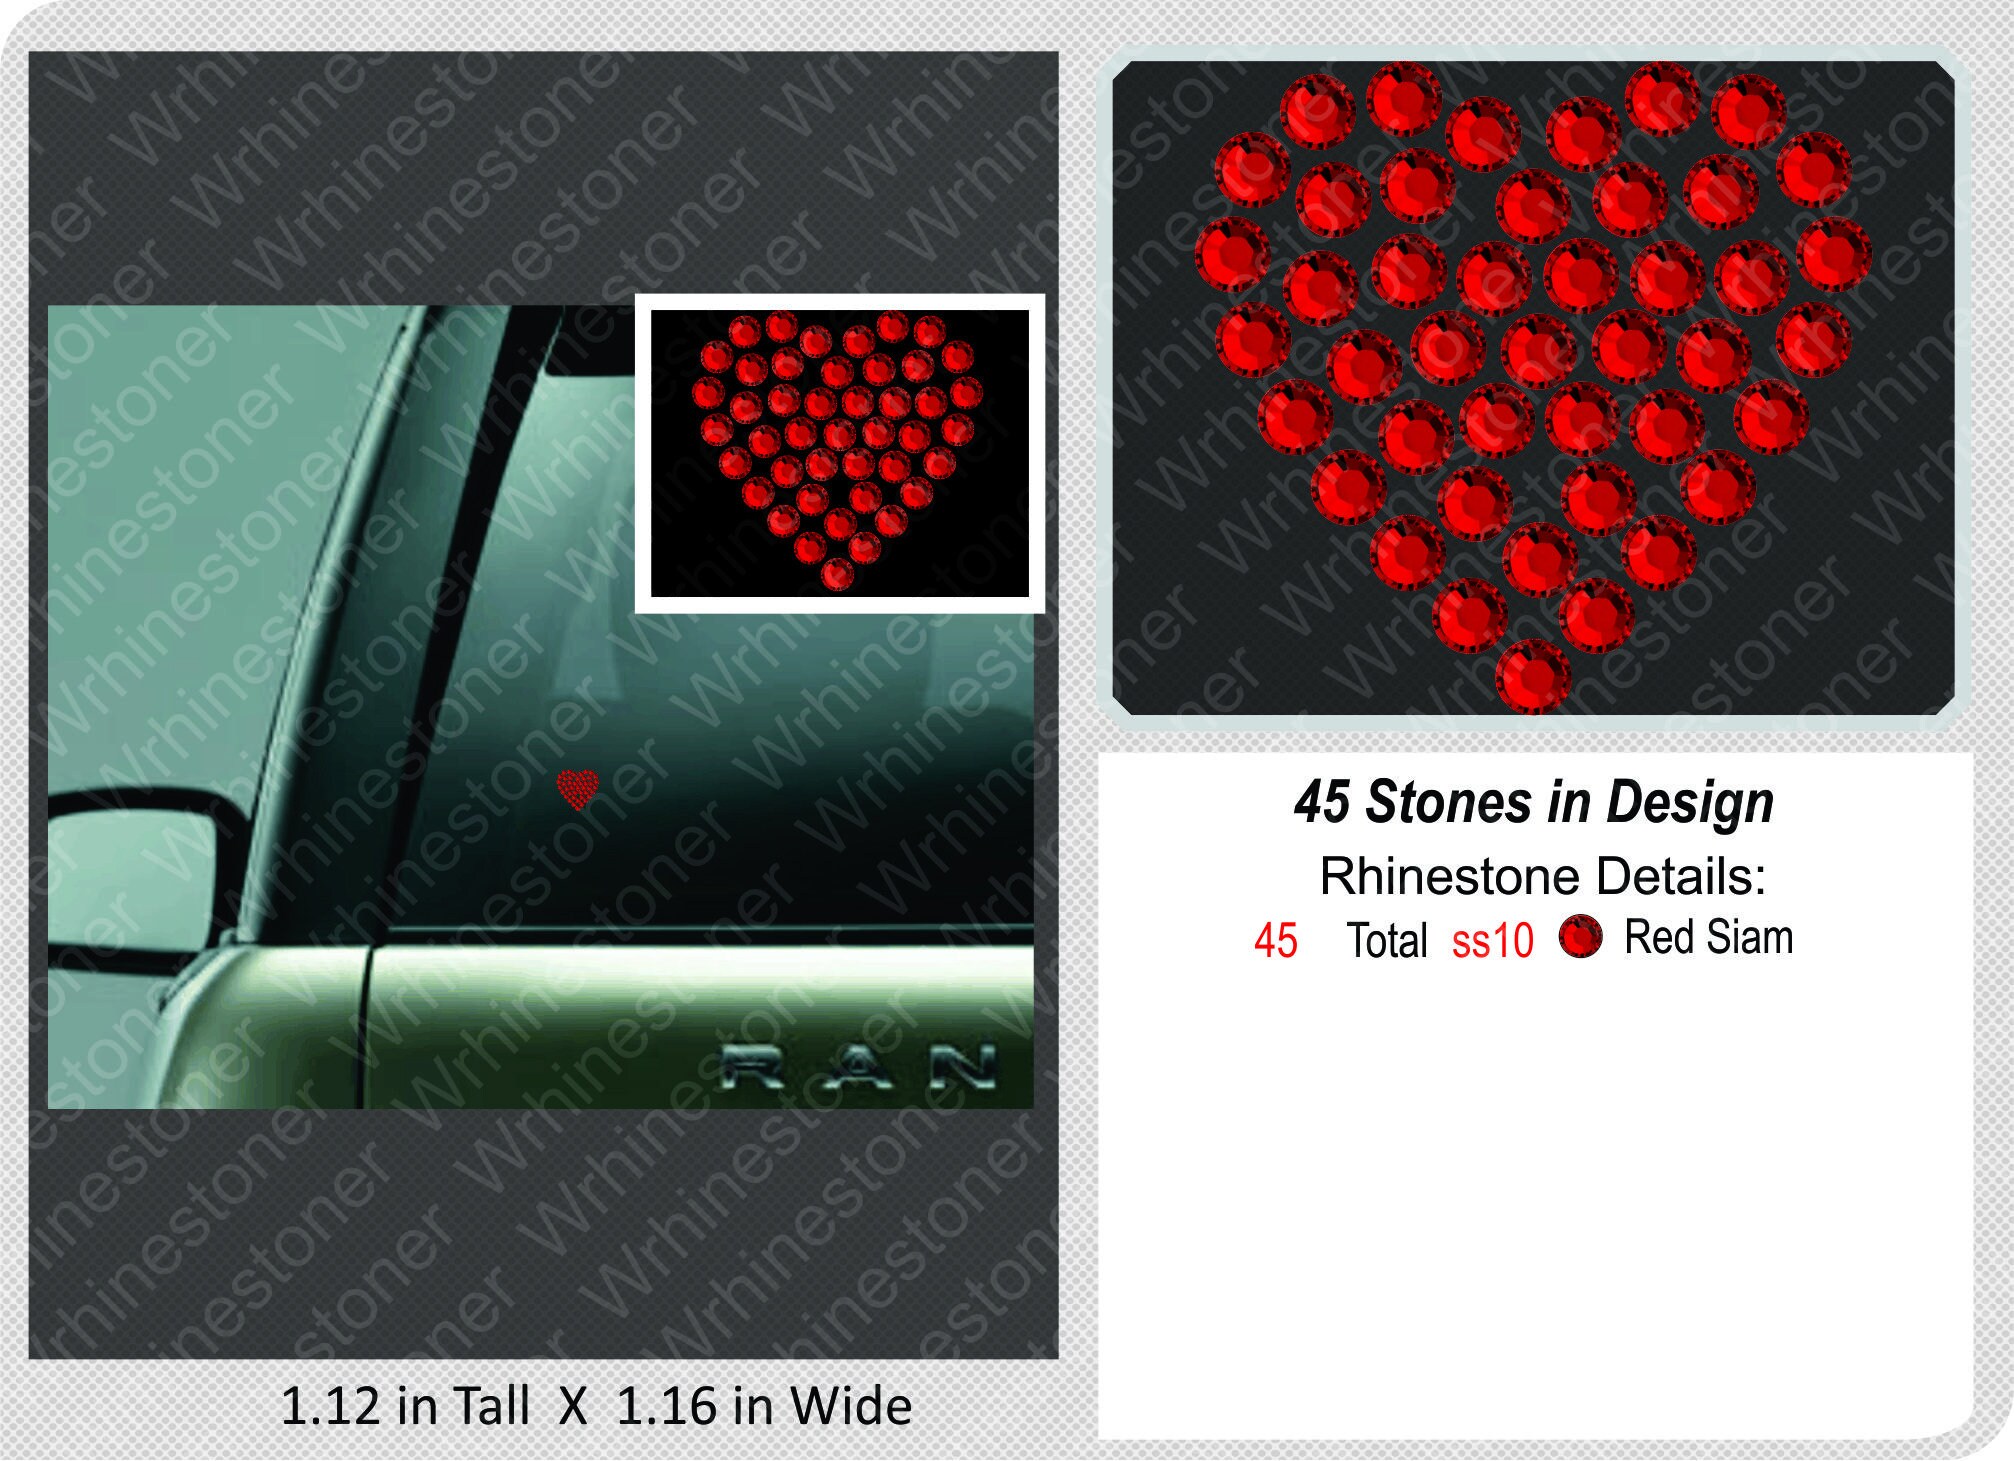 Heart Stickers, 3D Rhinestone Small Heart Stickers, Small Heart